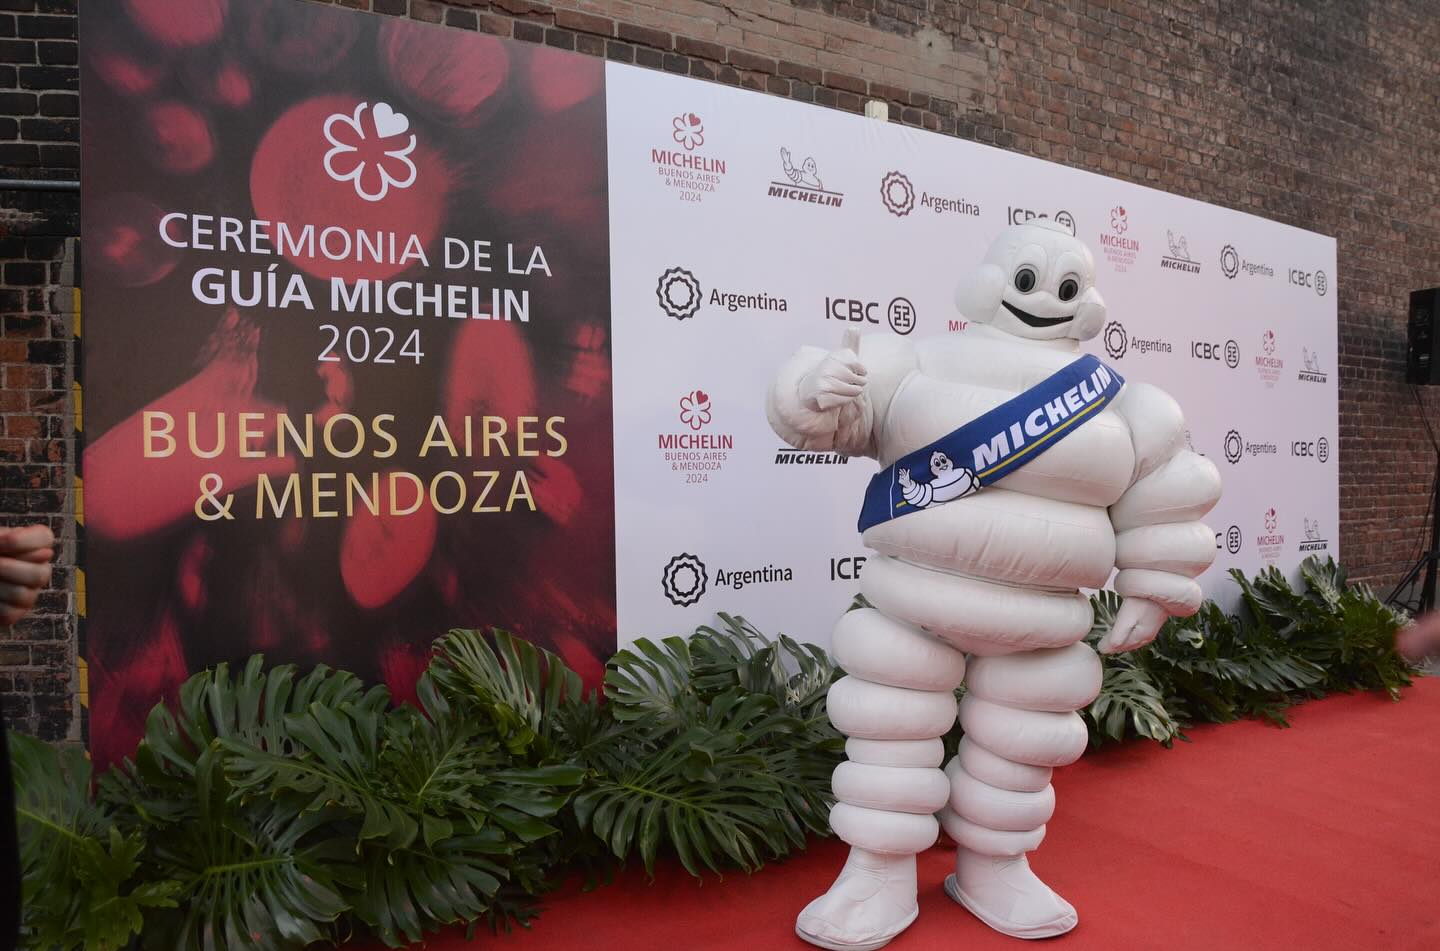 Mendoza is proud of 4 Michelin starred restaurants